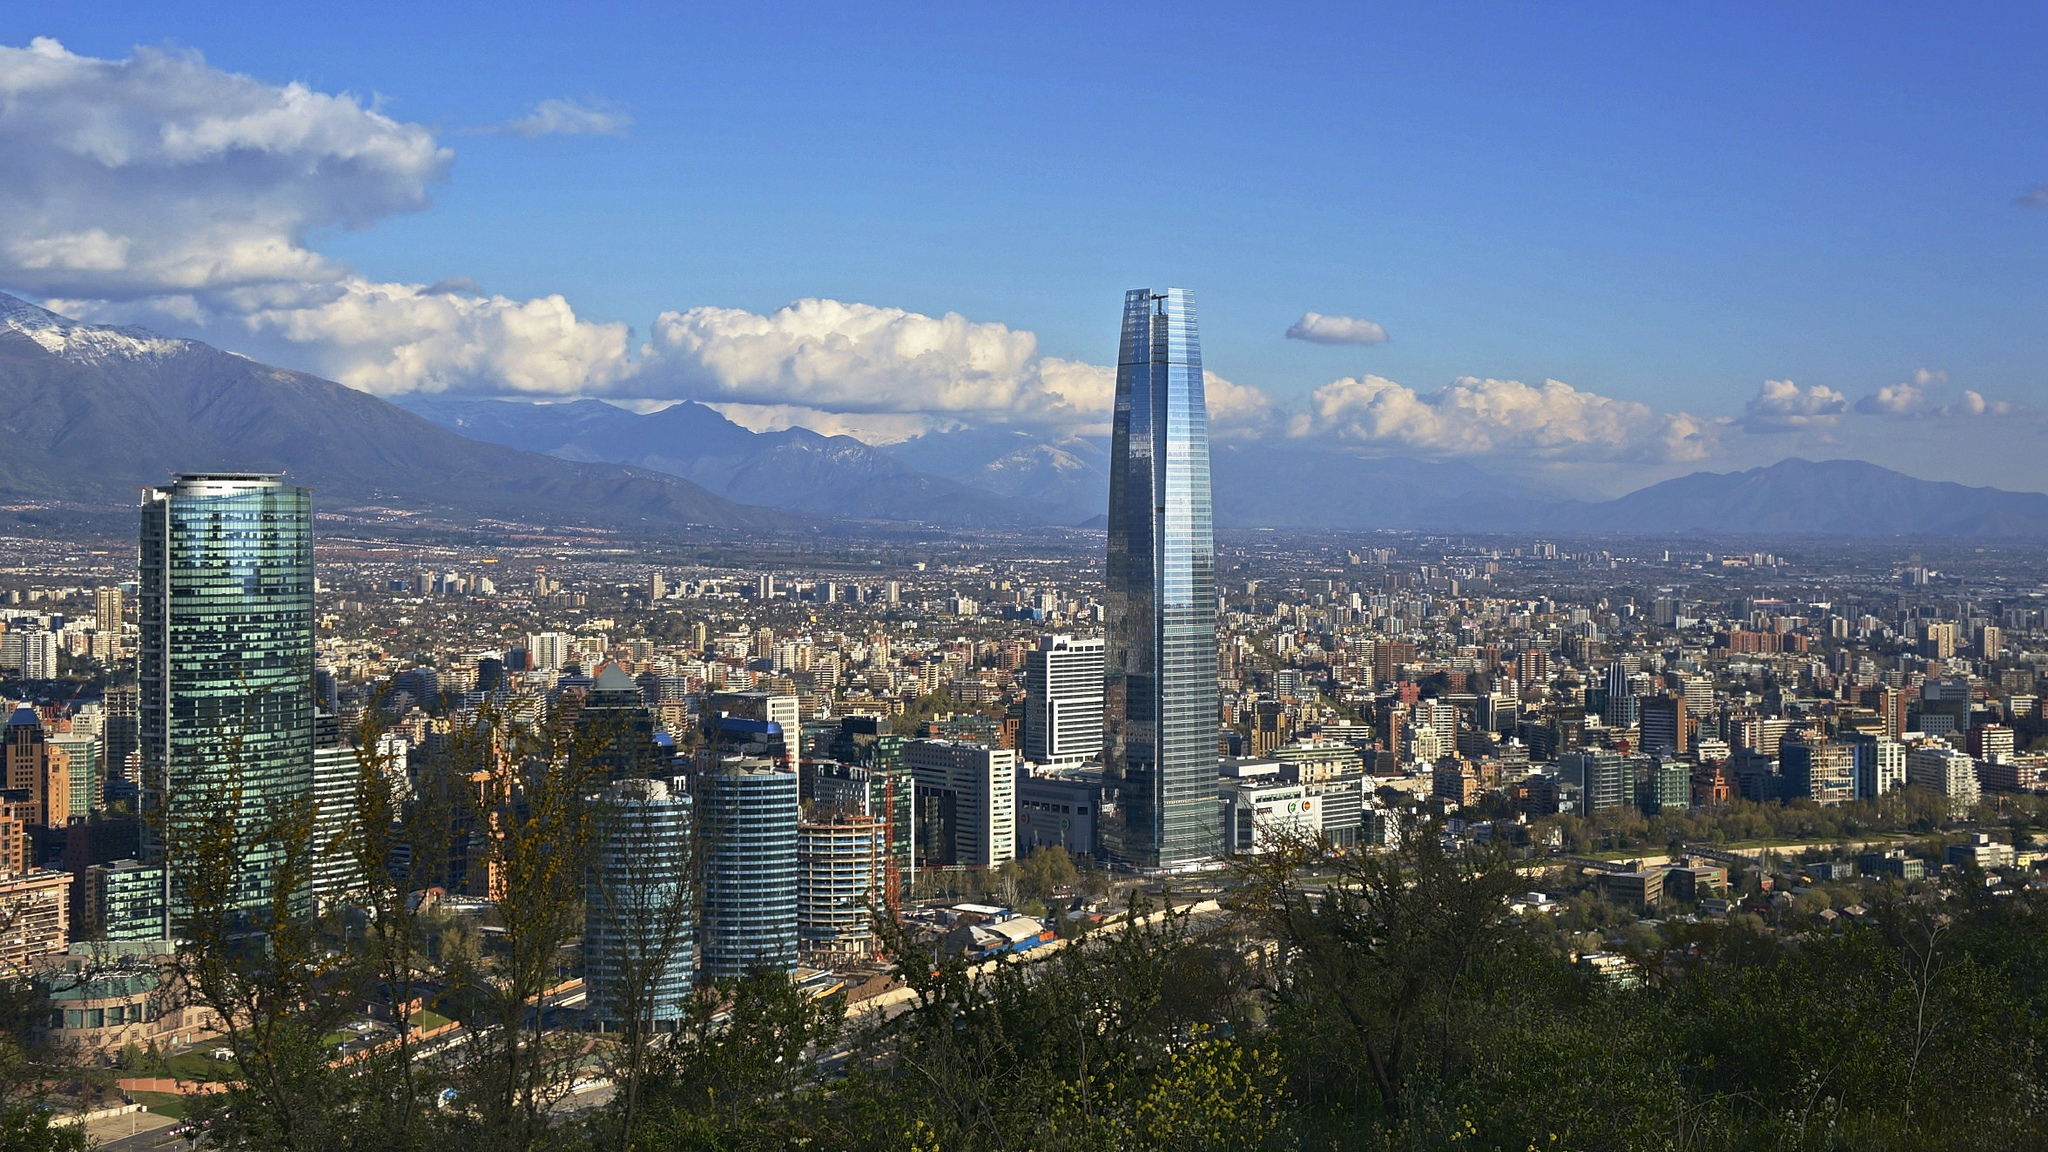 Santiago in Chile